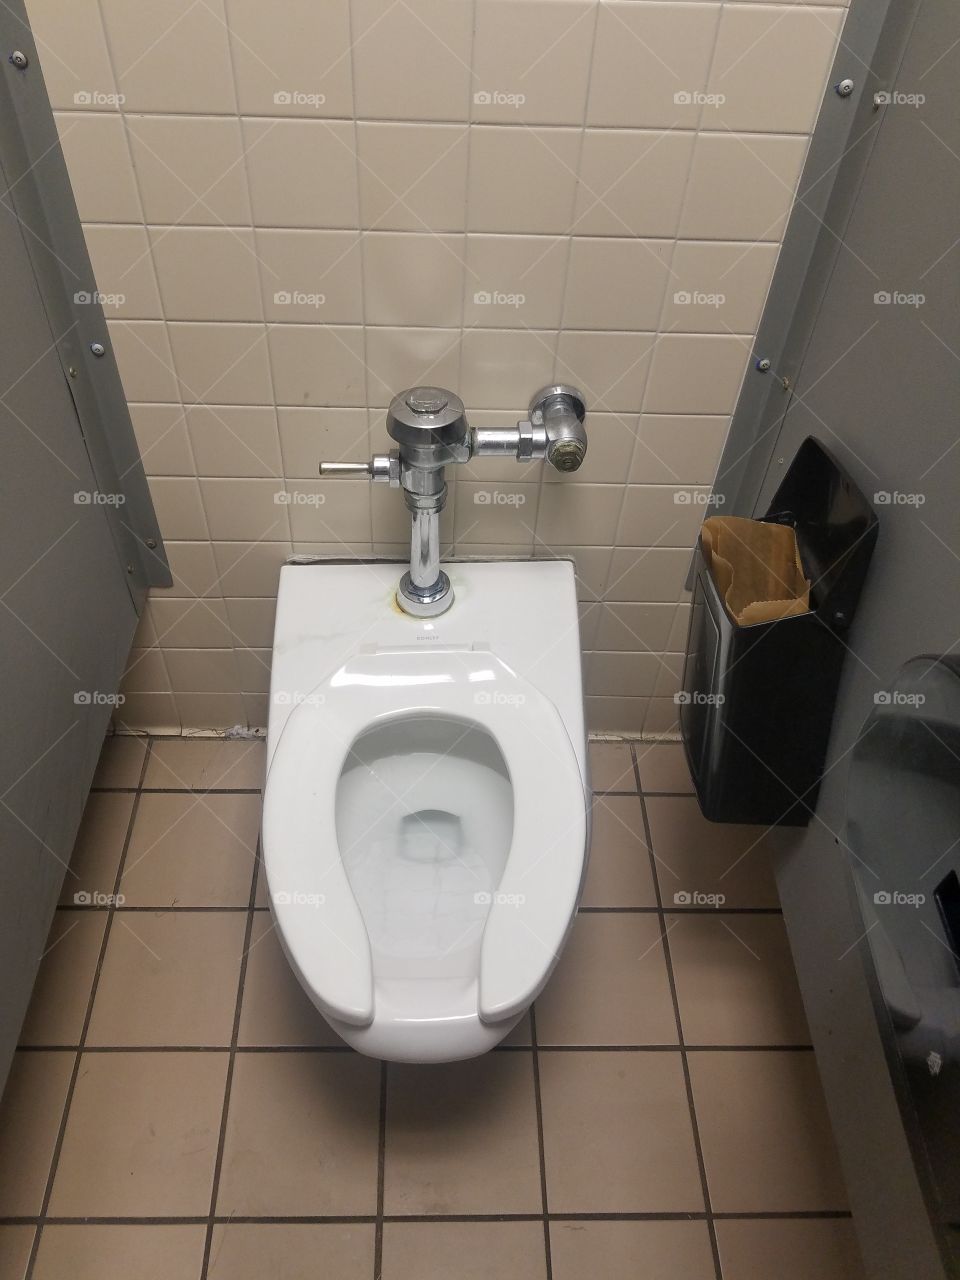 Ladies room toilet